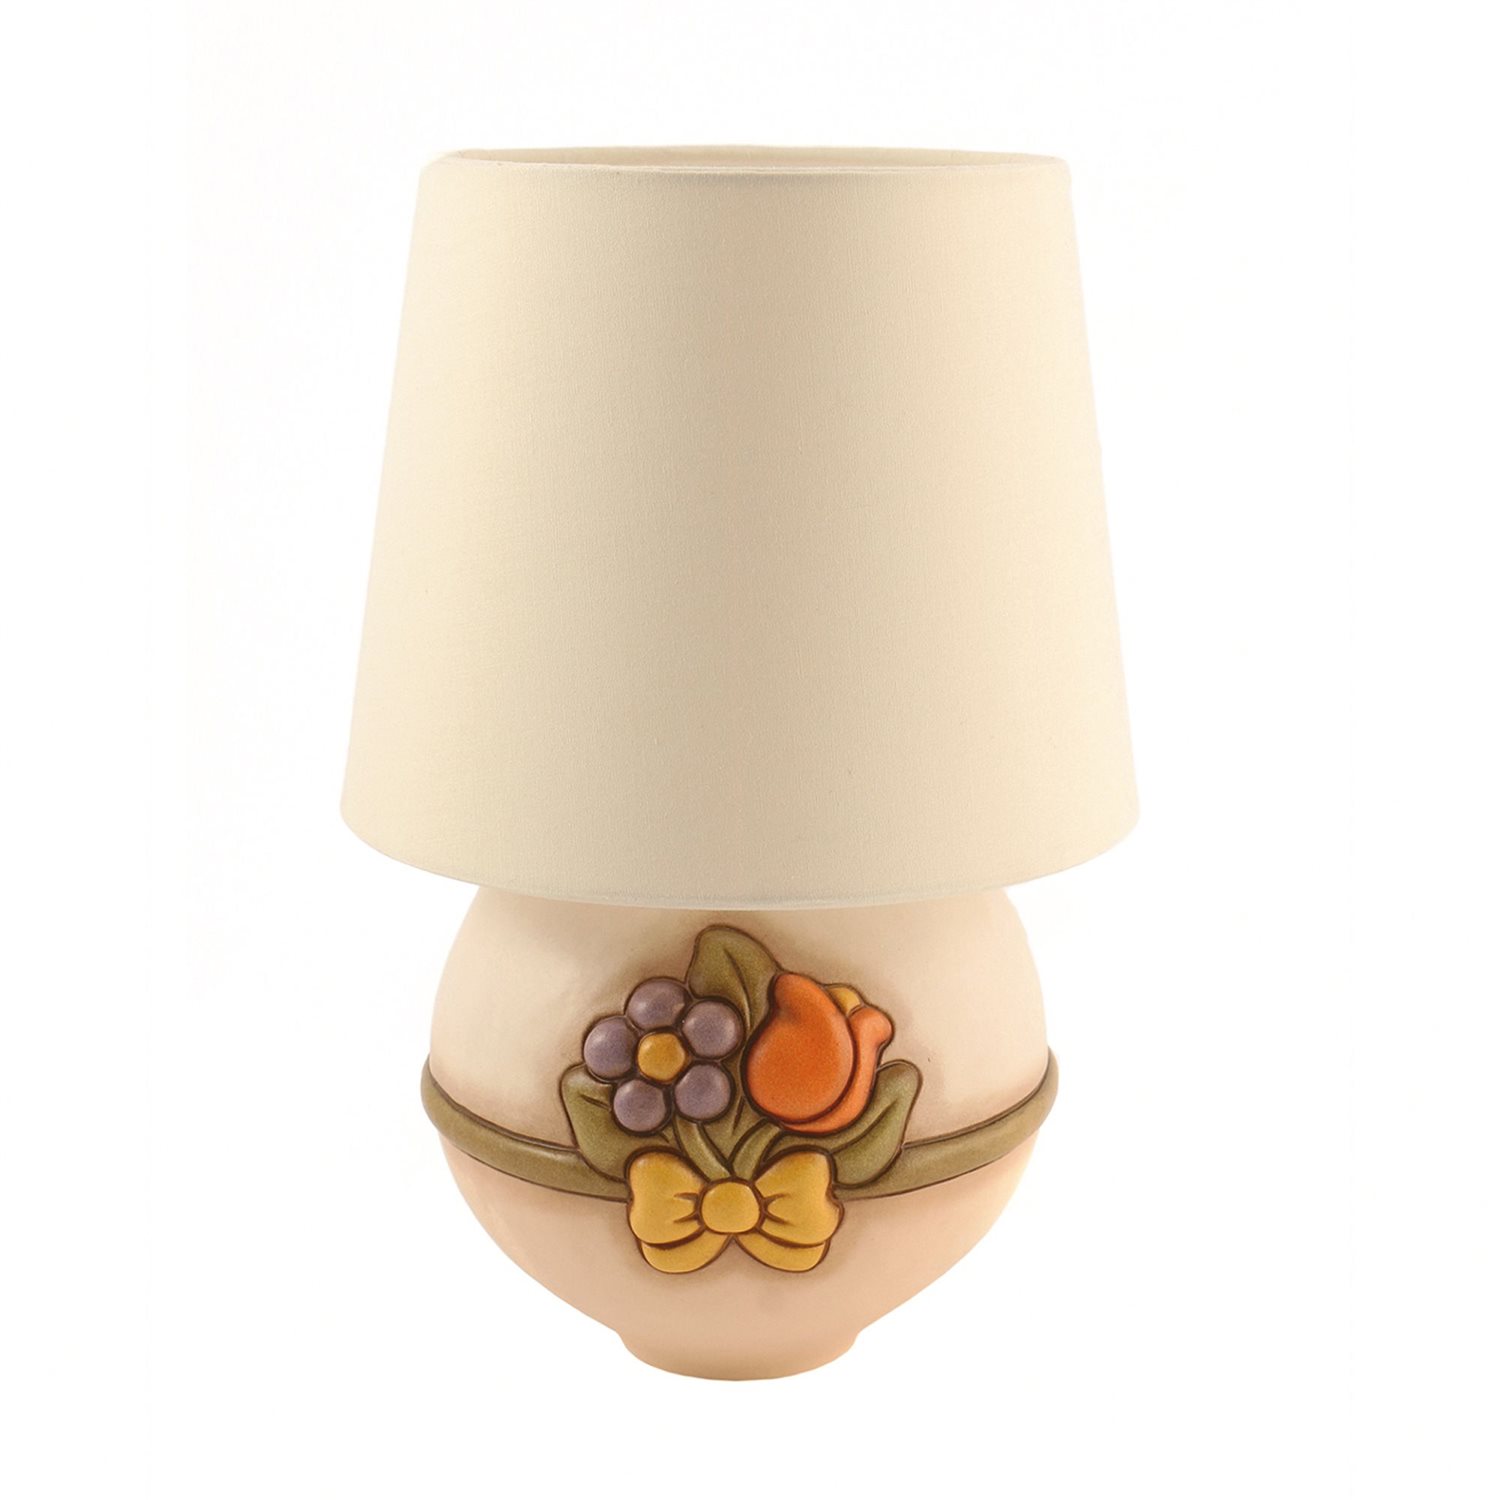 Oiritaly Lampada - Donna - Thun - C127H90 - Ceramica